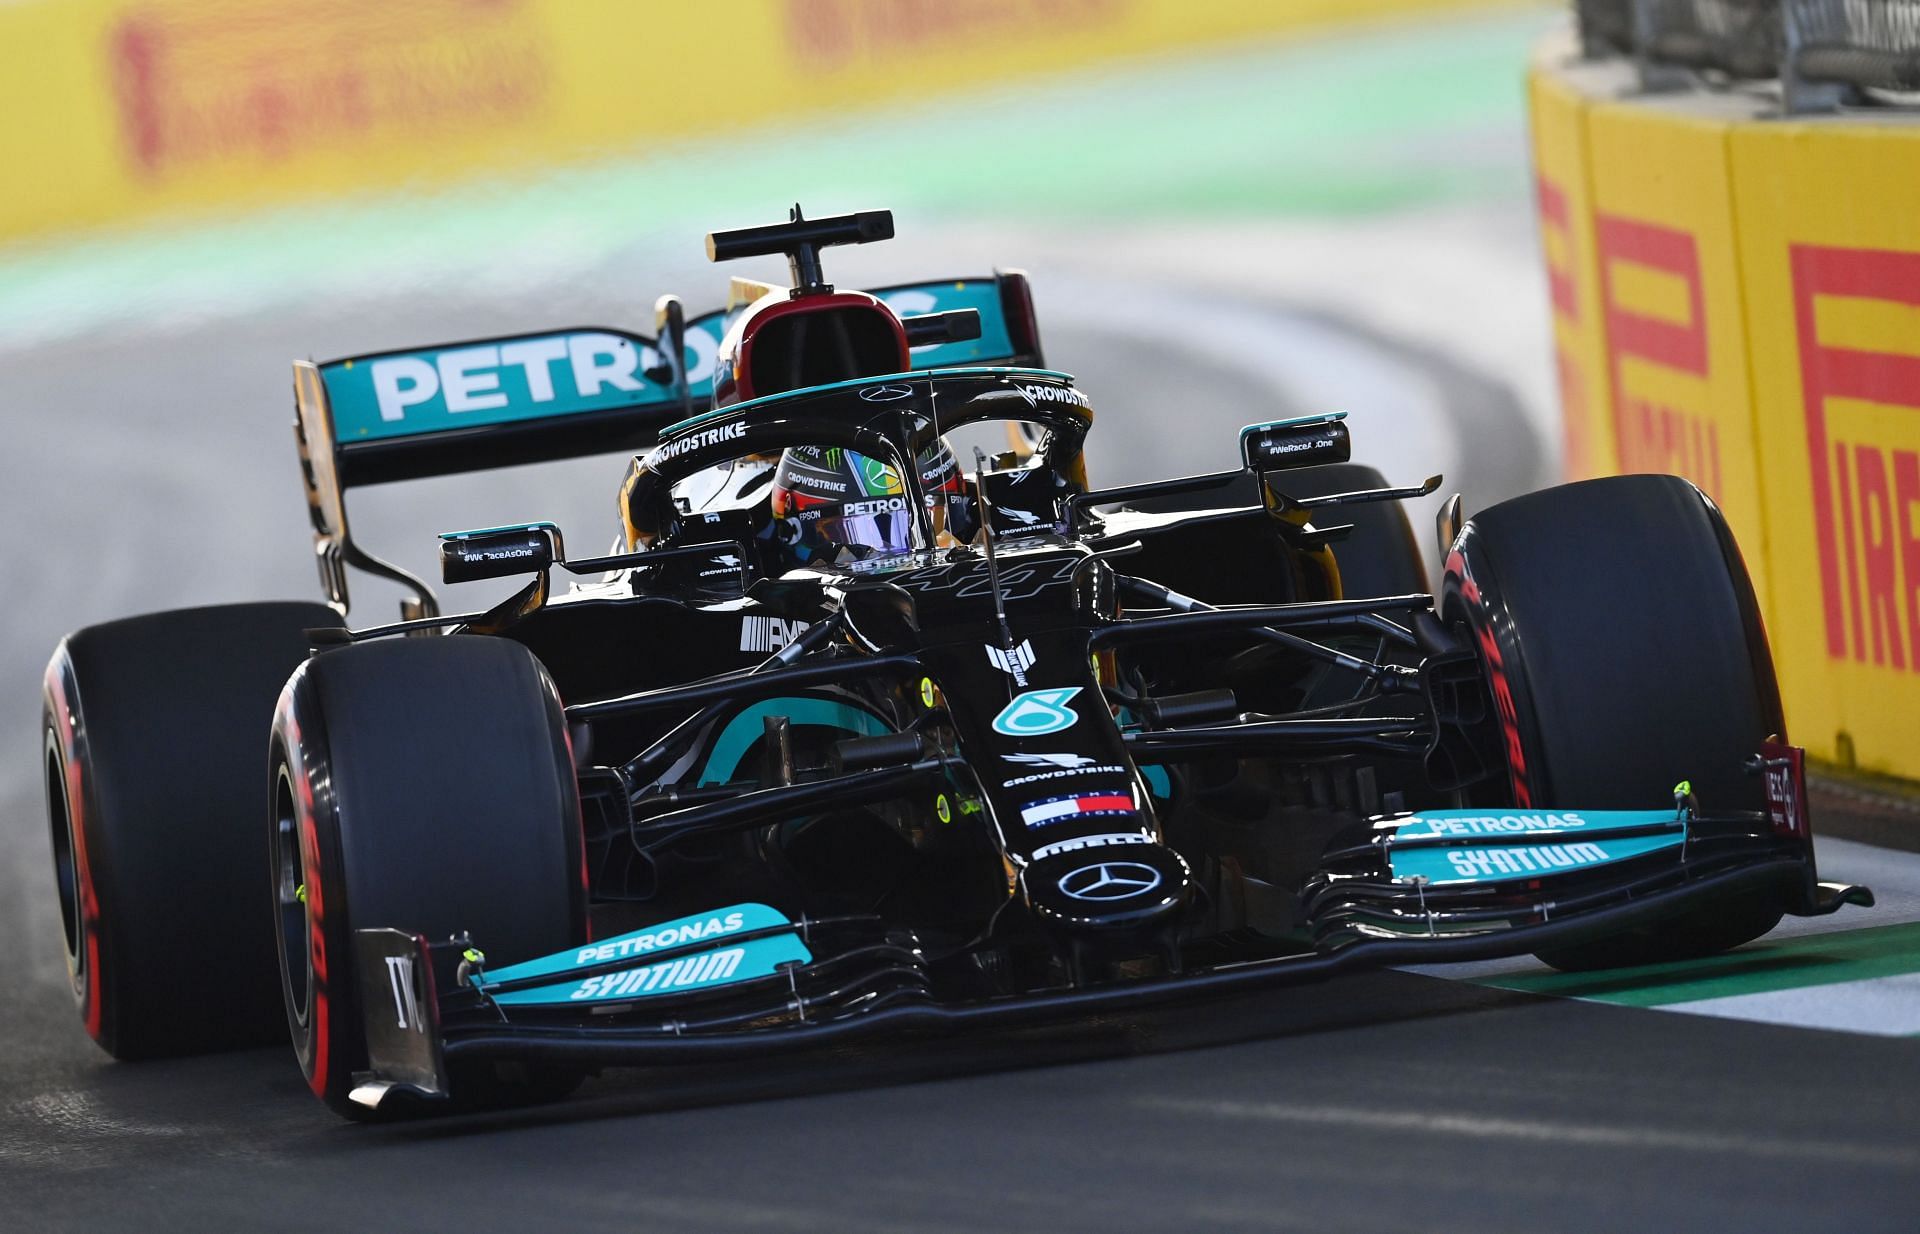 Saudi Arabian Grand Prix Advantage Lewis Hamilton as Mercedes 12